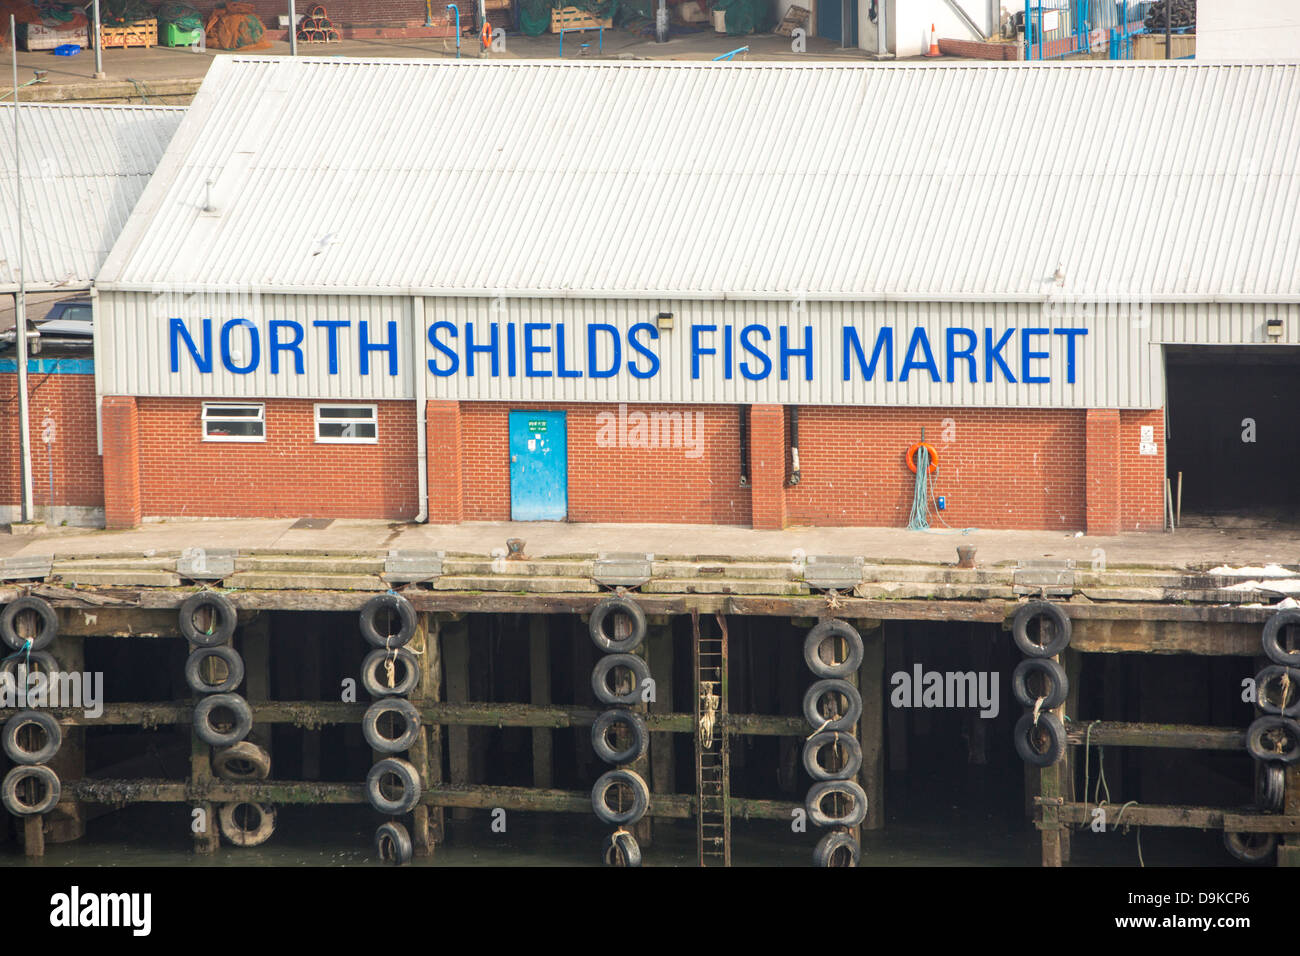 The Fish Market in North Shields near Newcastle, UK. Stock Photo